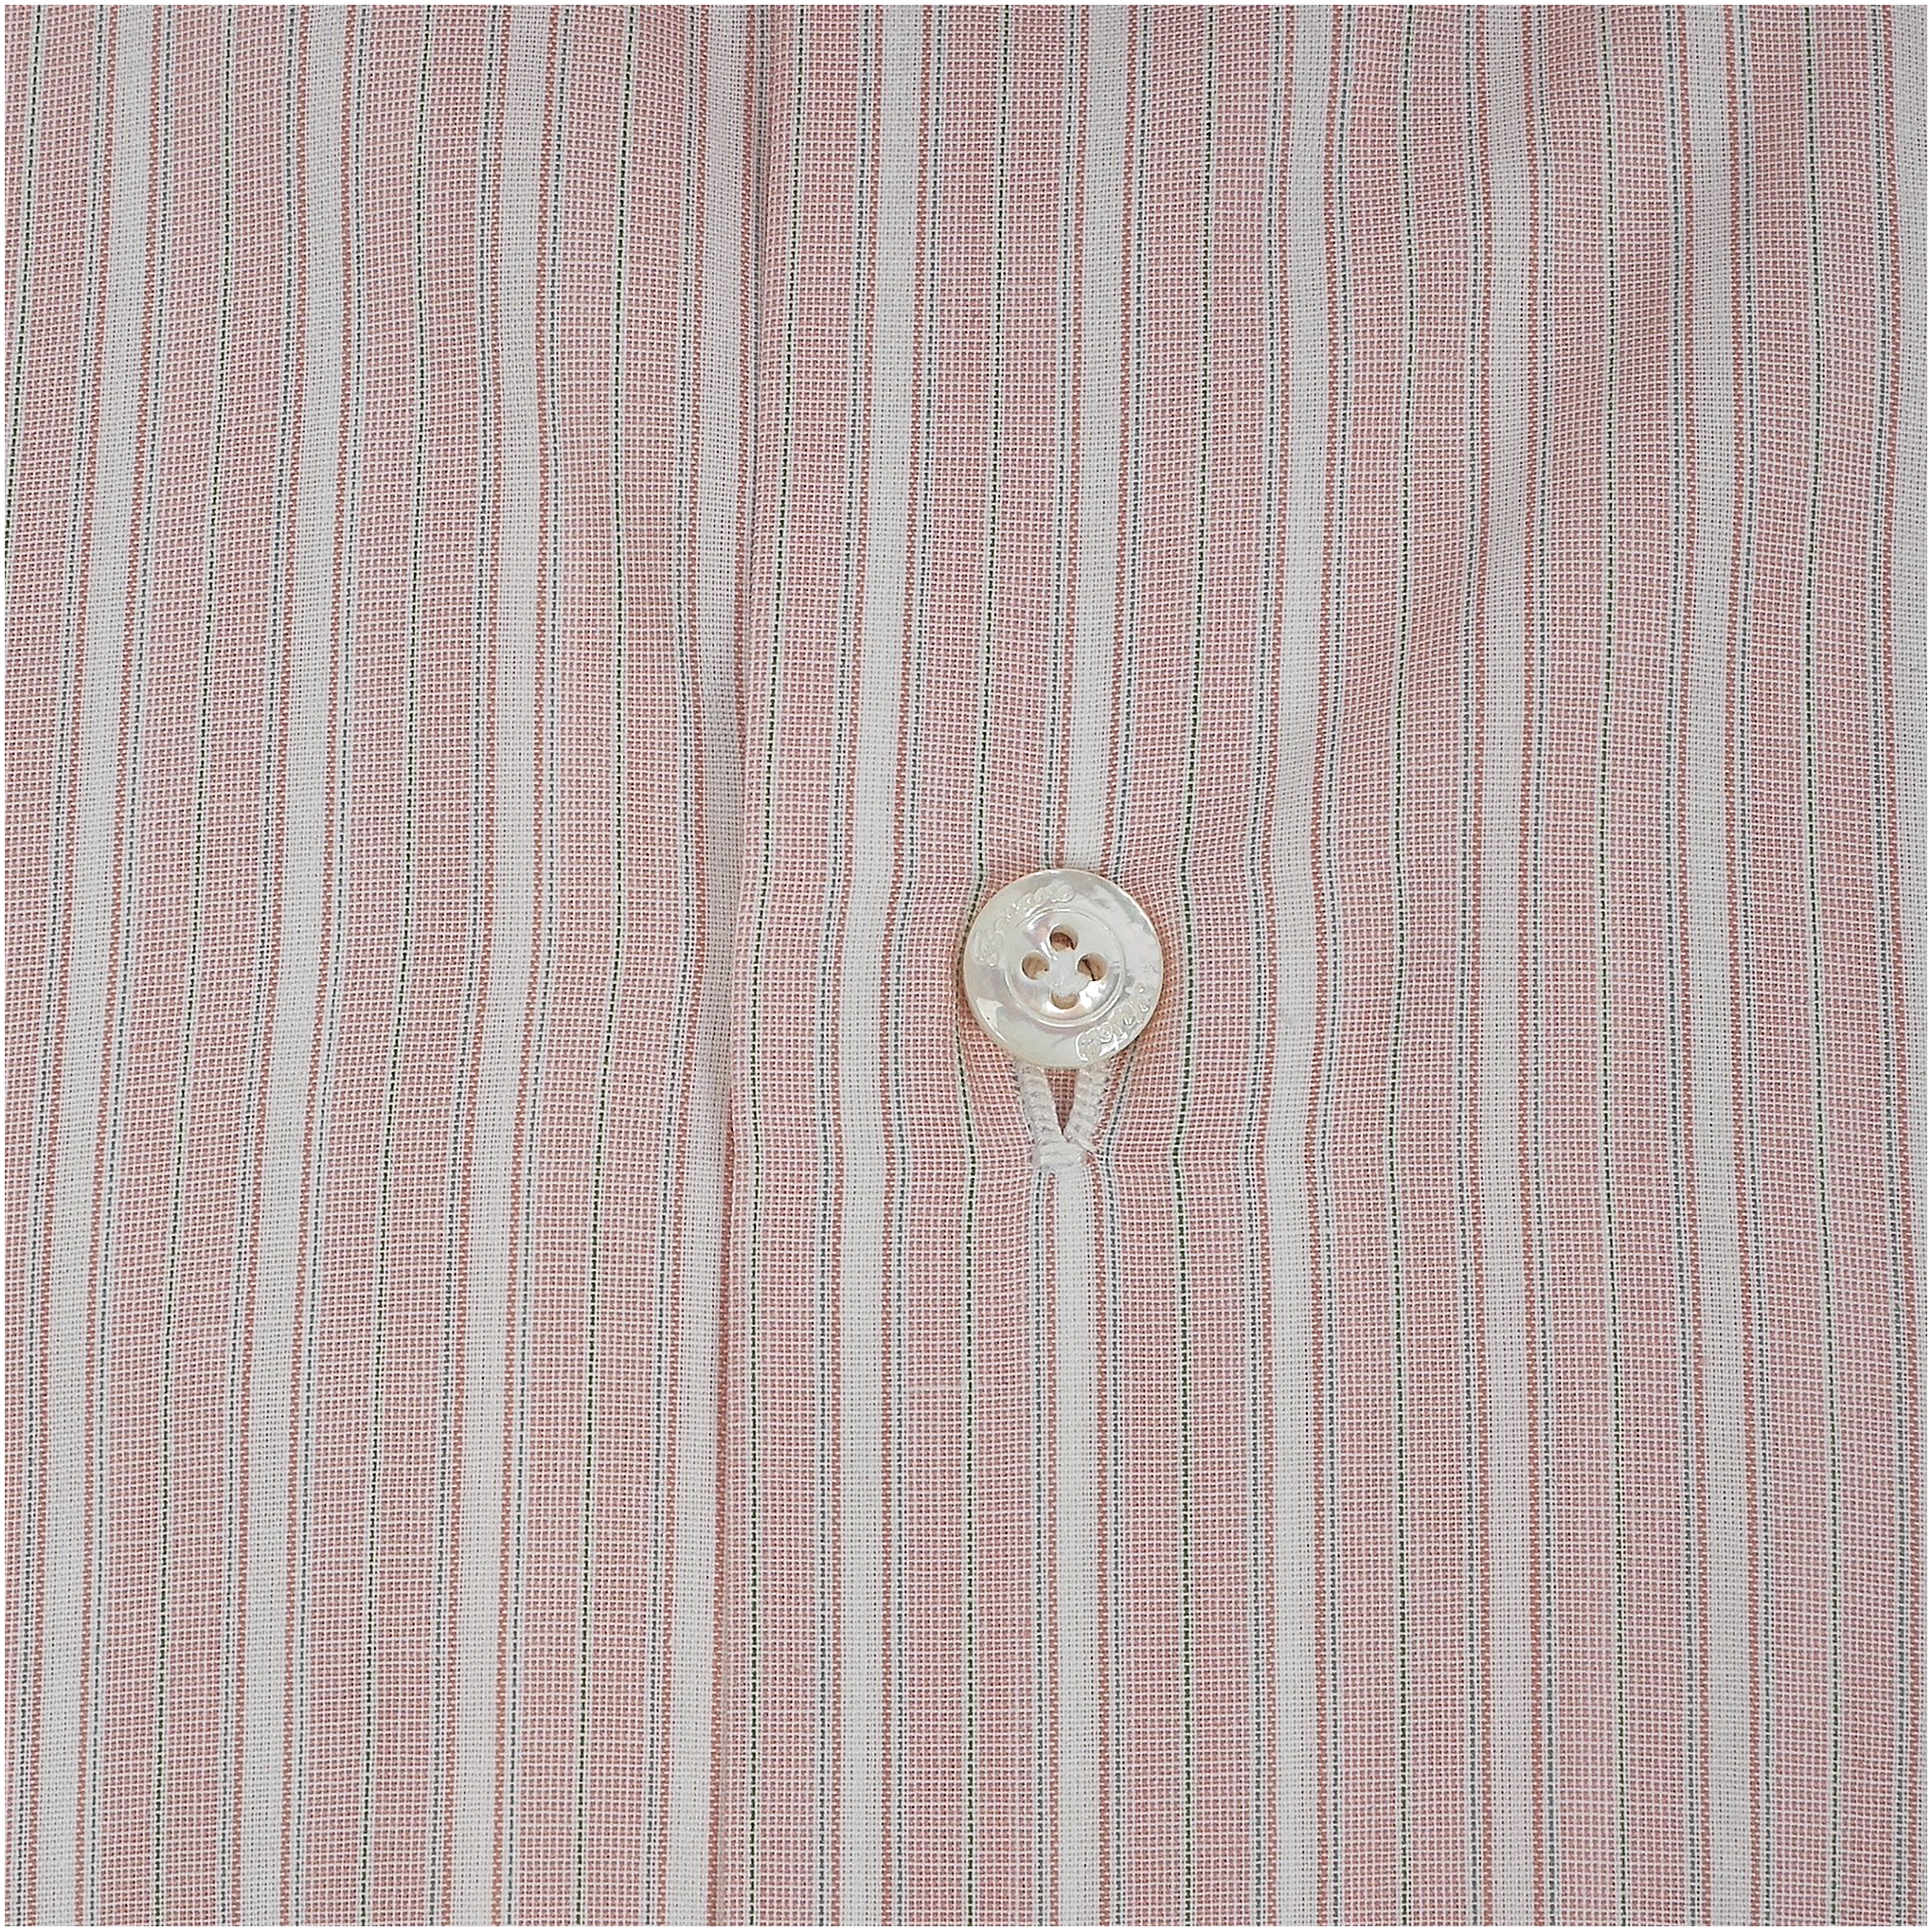 Napoli classic shirt stripe light pink in cotton Riva